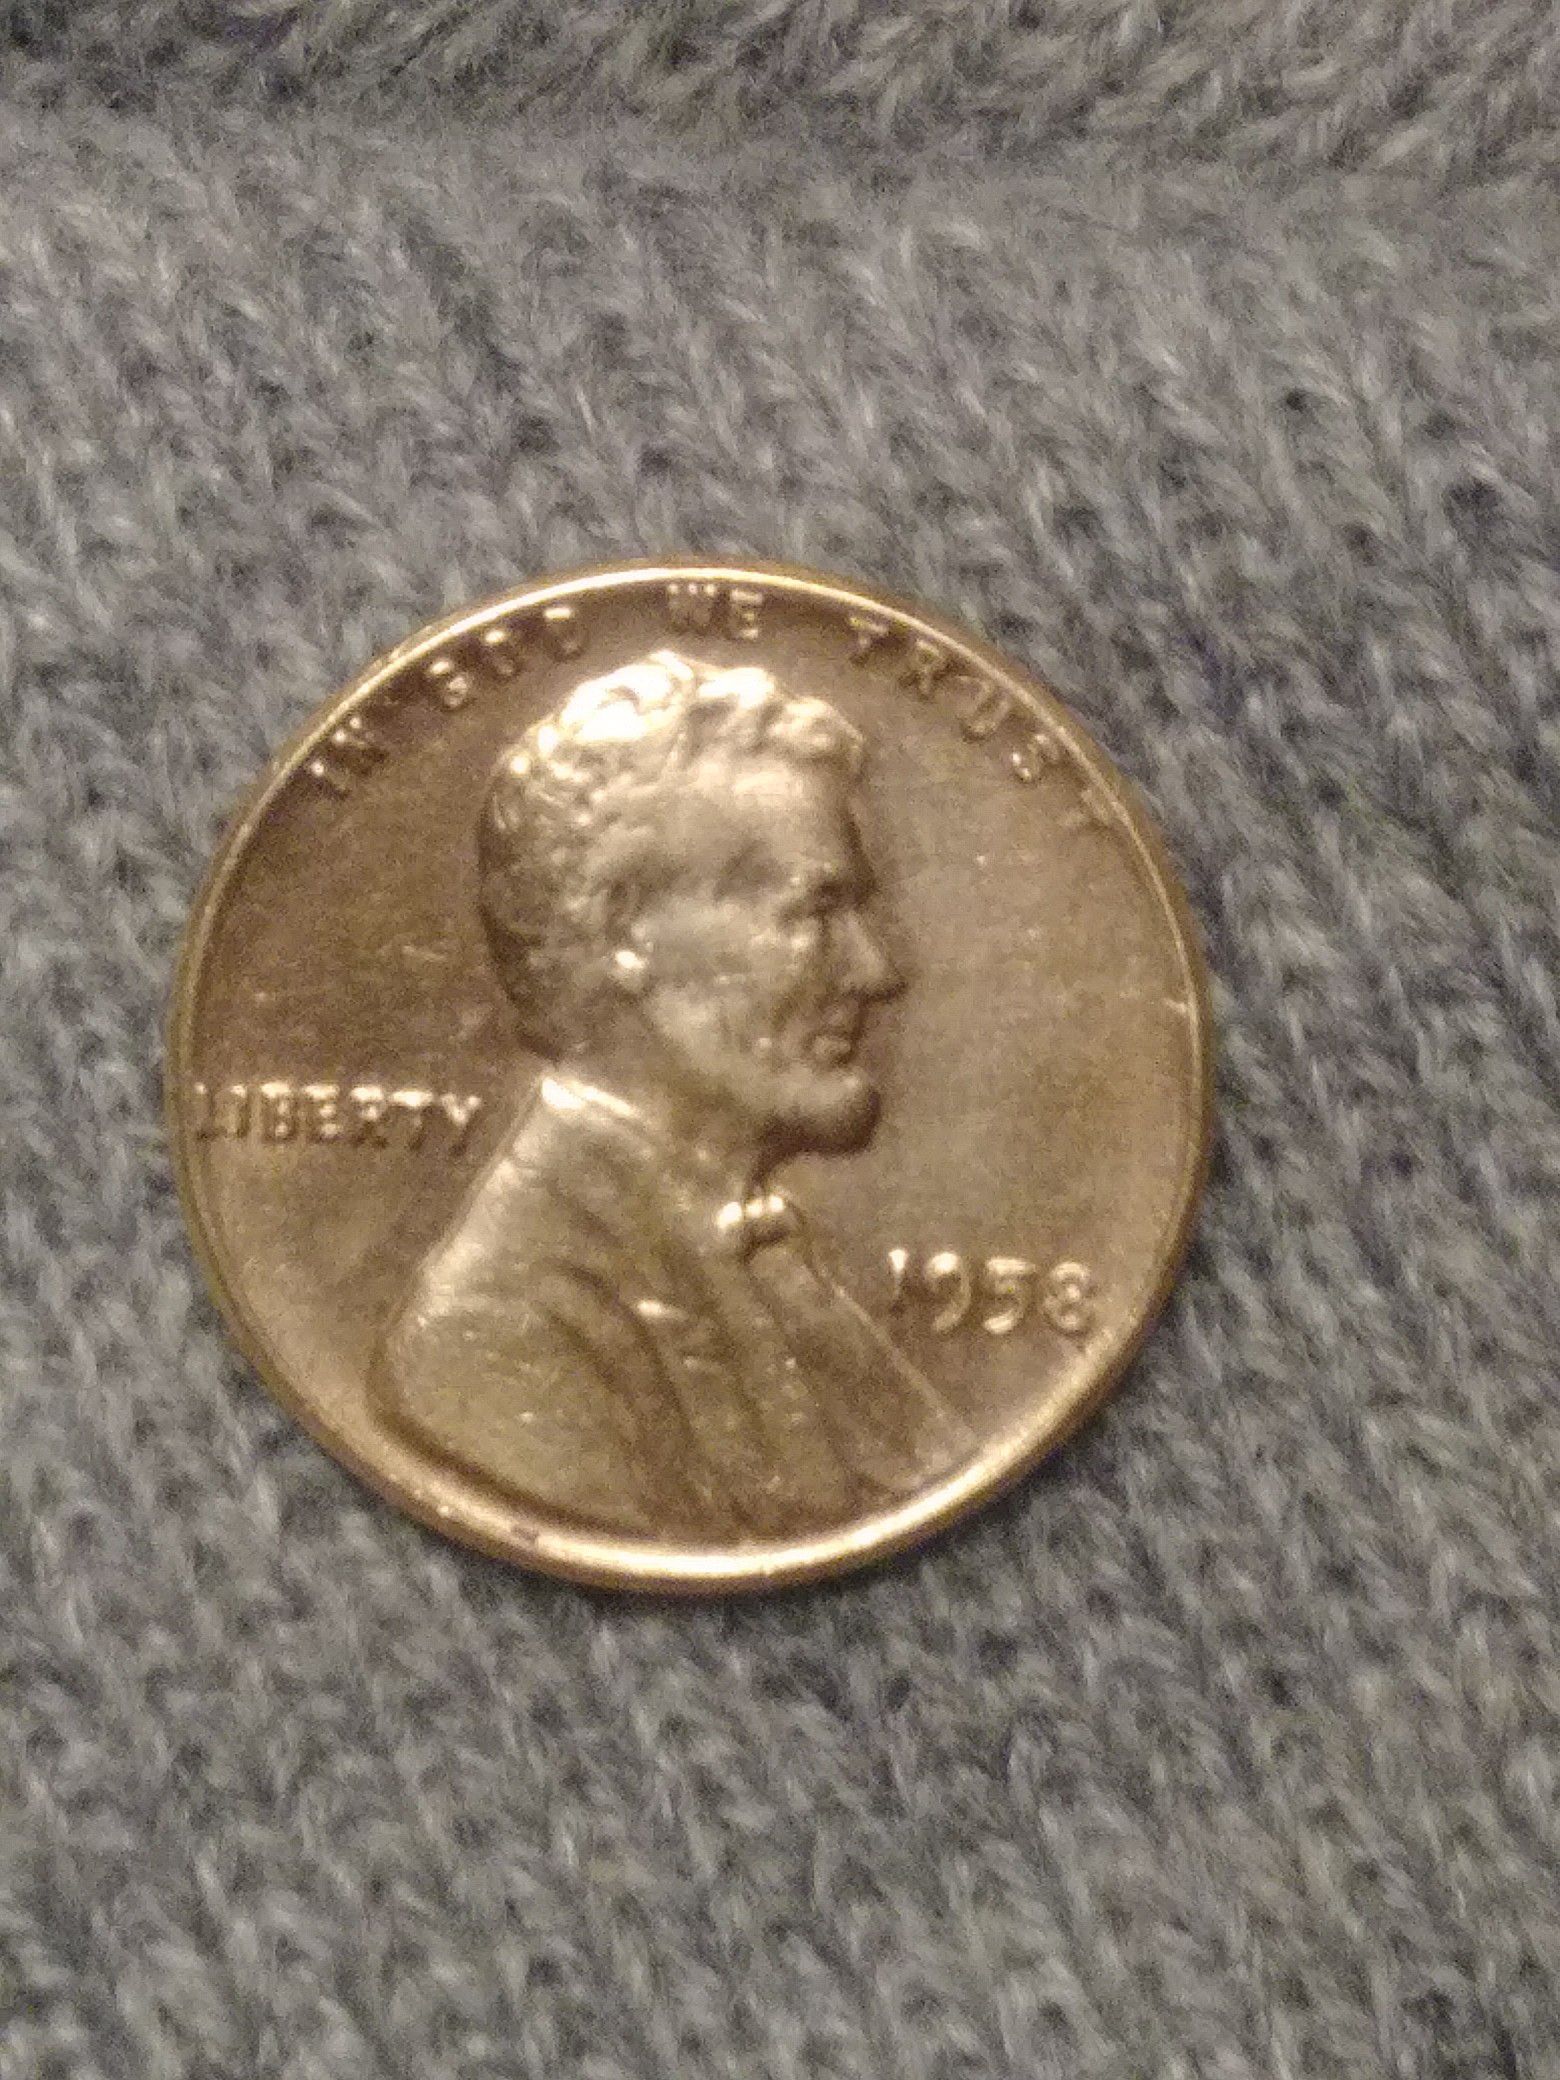 1958 wheat penny